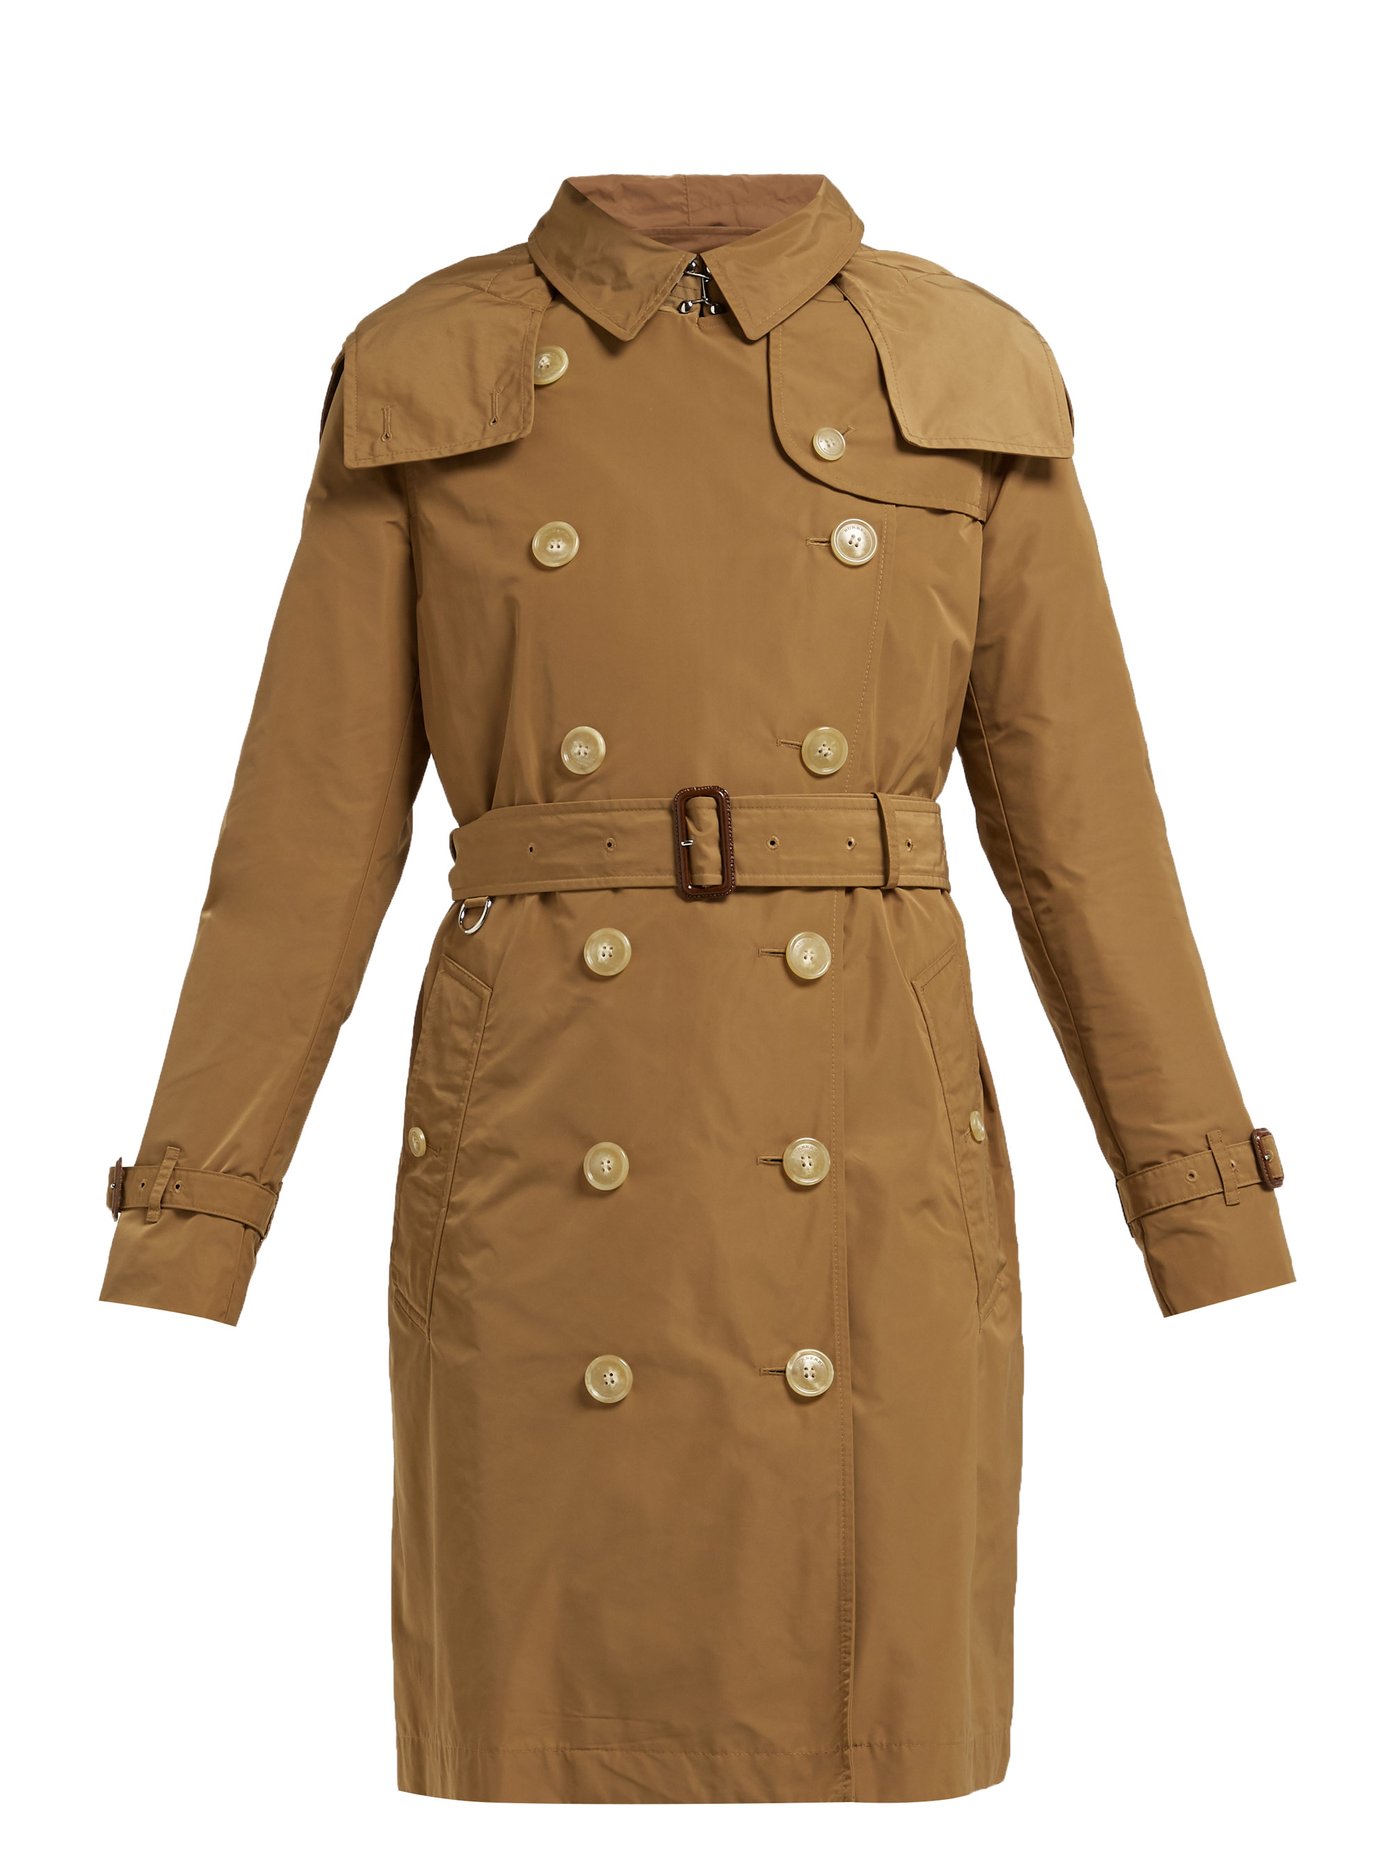 burberry taffeta trench coat review